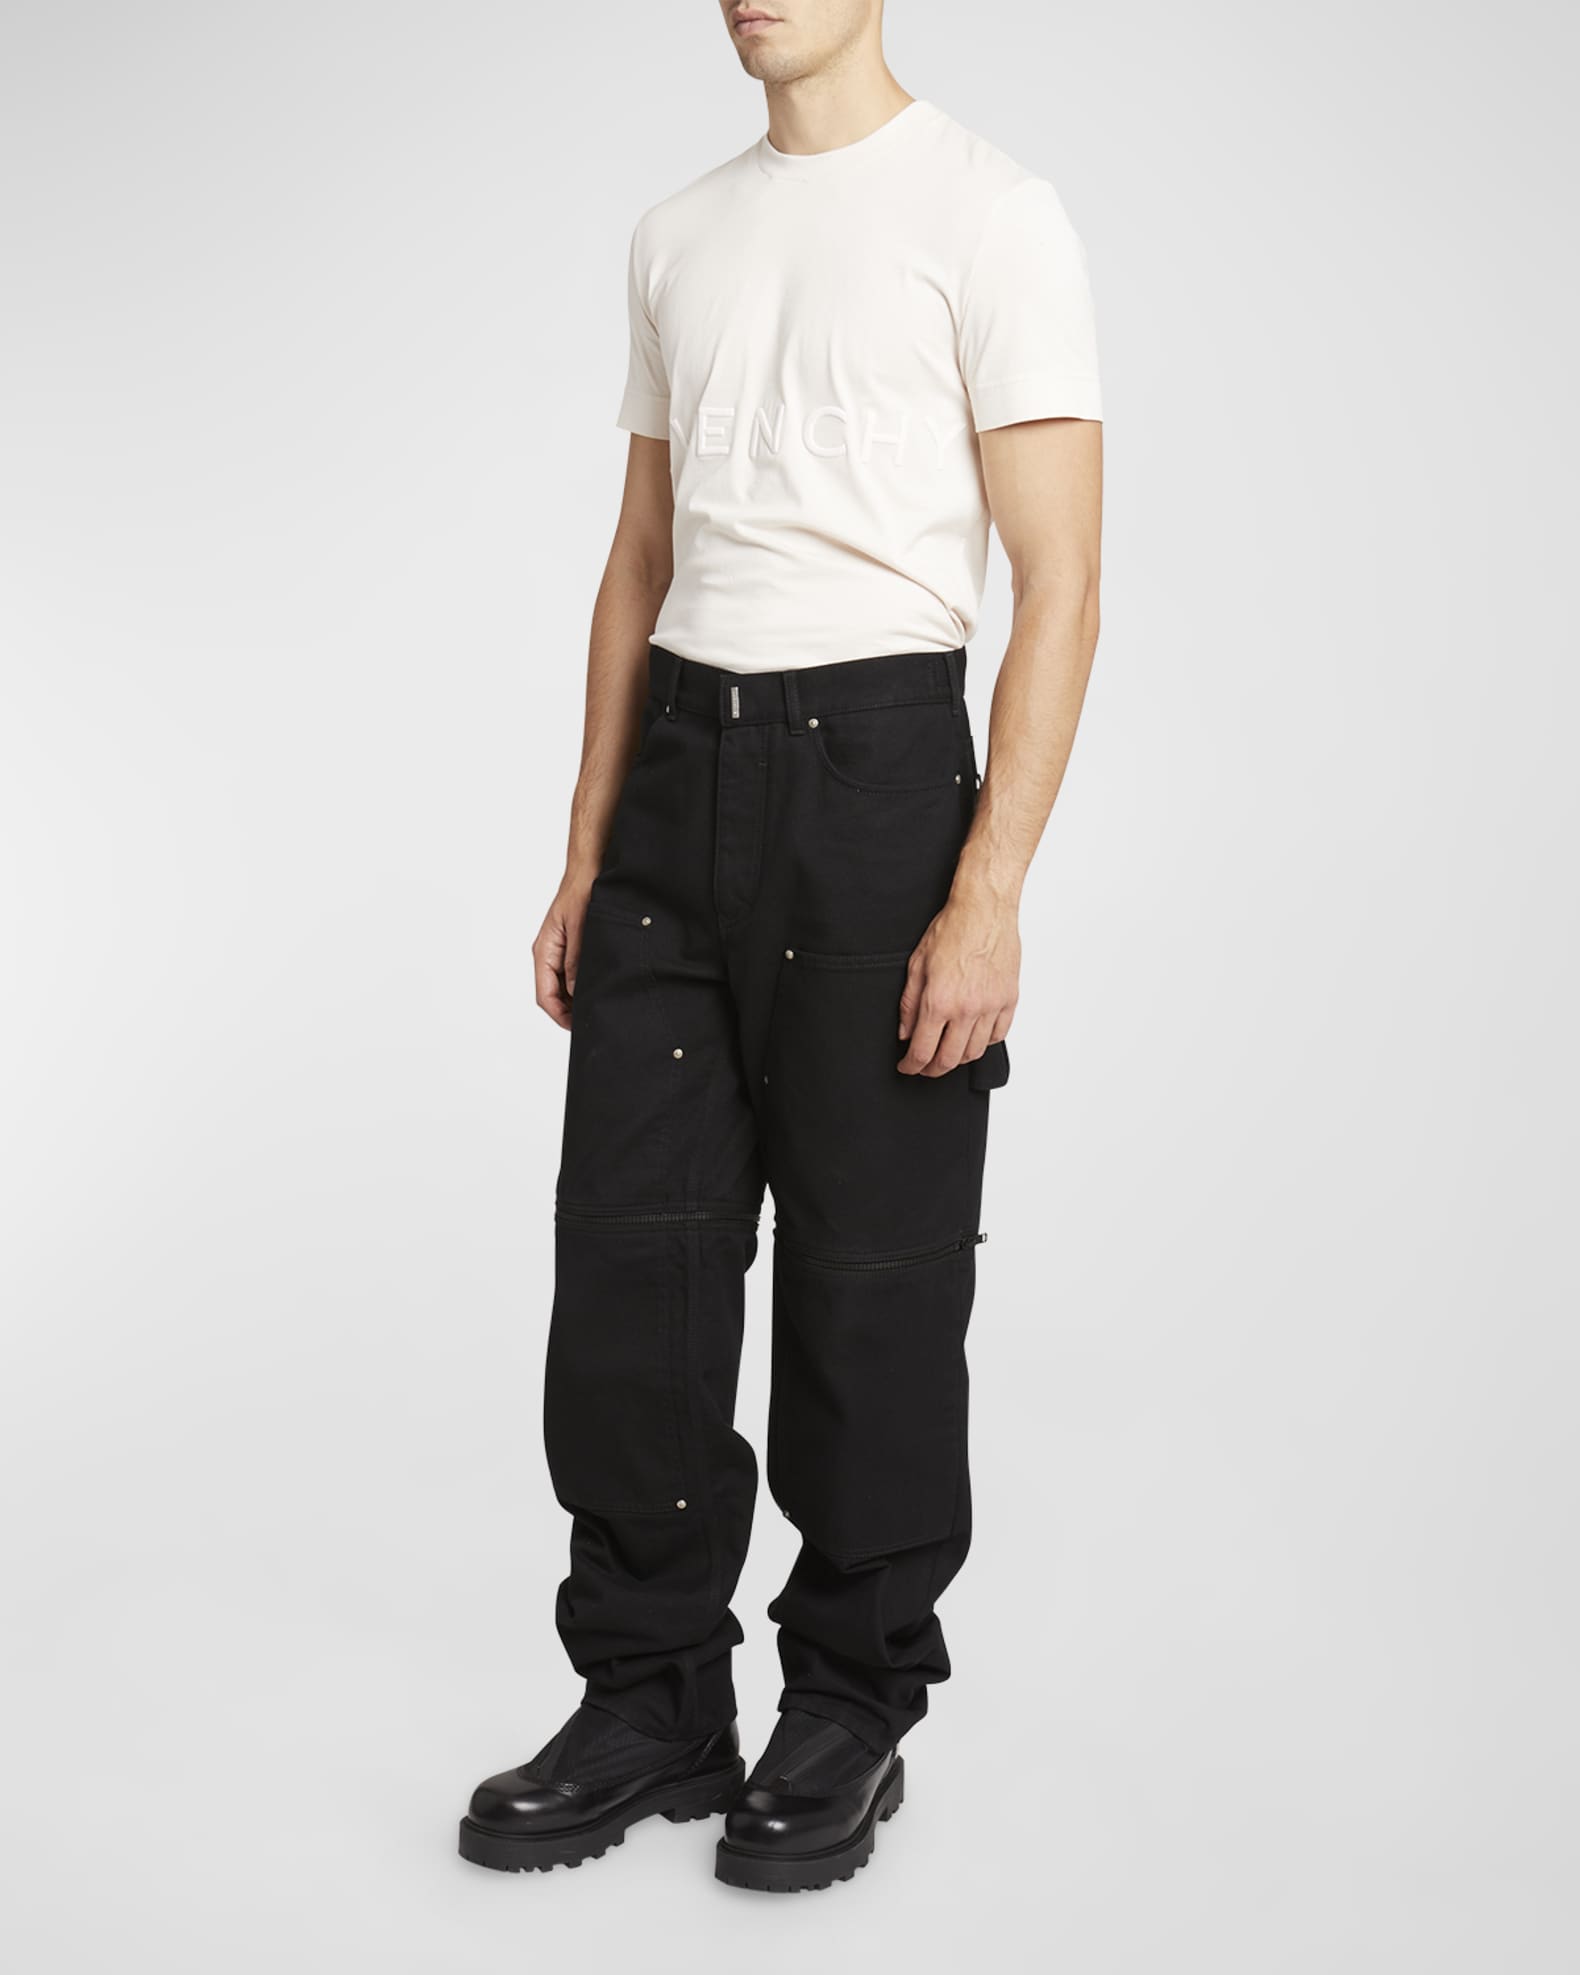 Givenchy Men's Zip-Off Carpenter Jeans